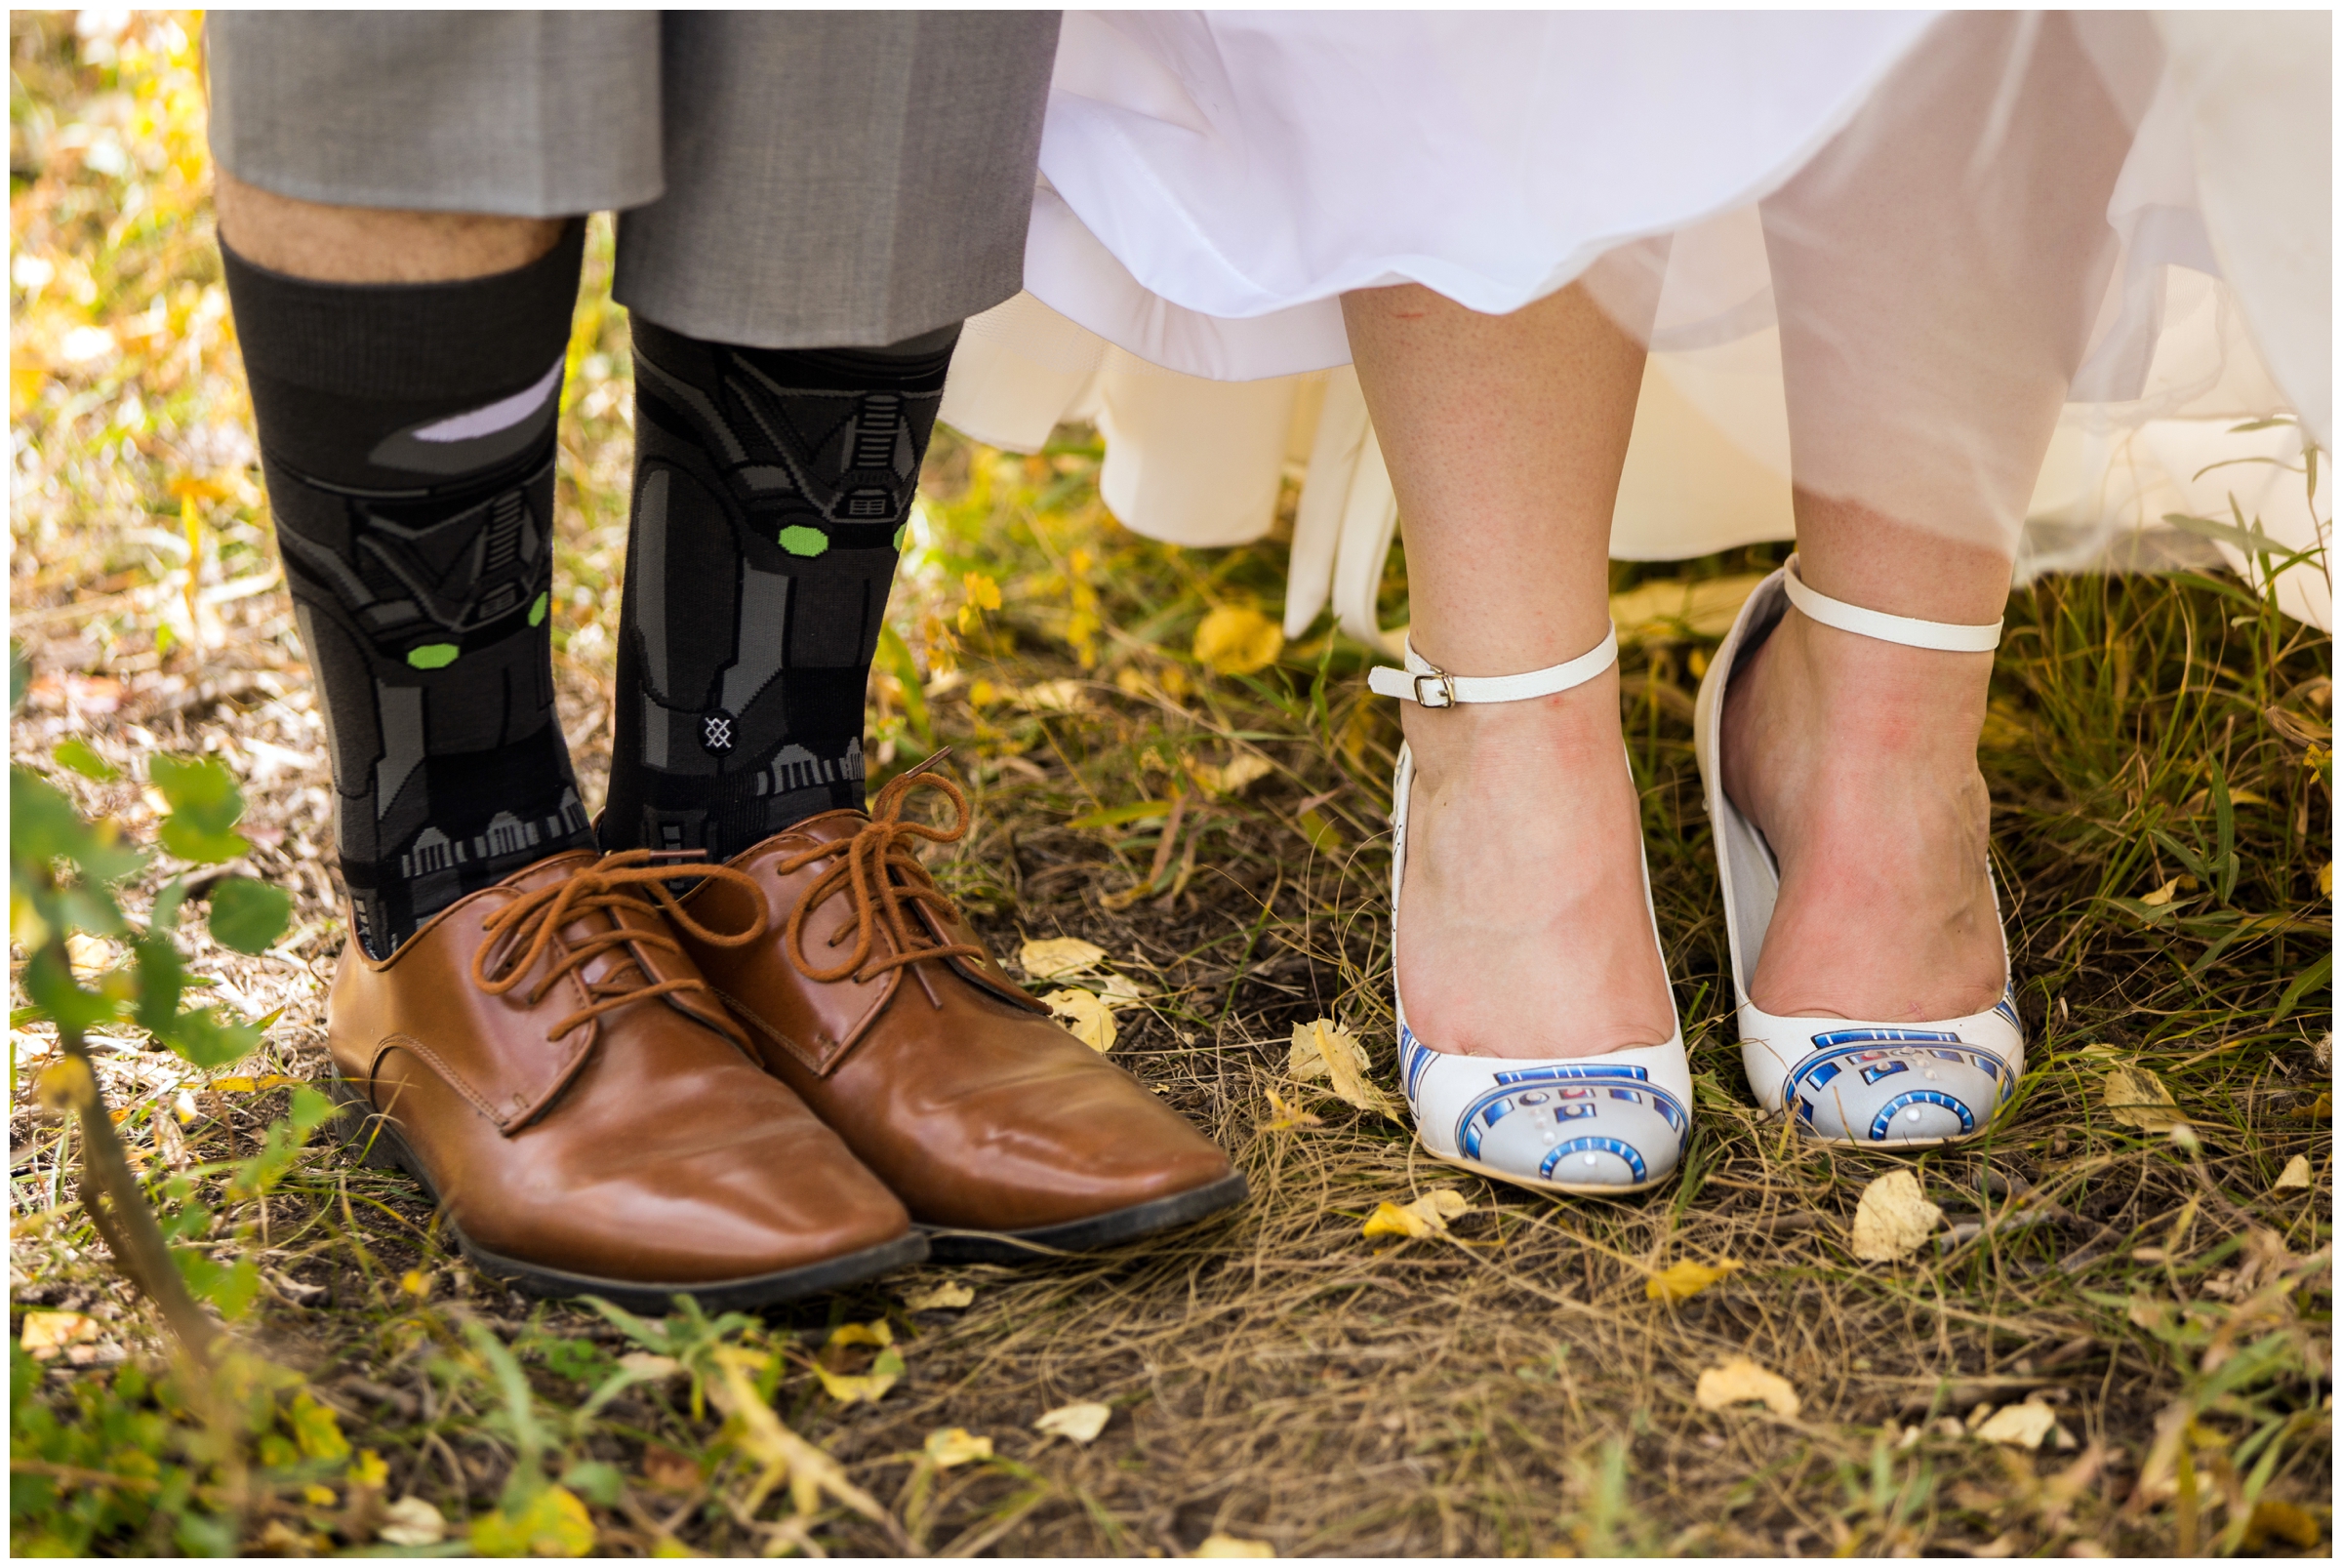 star wars wedding shoes and socks